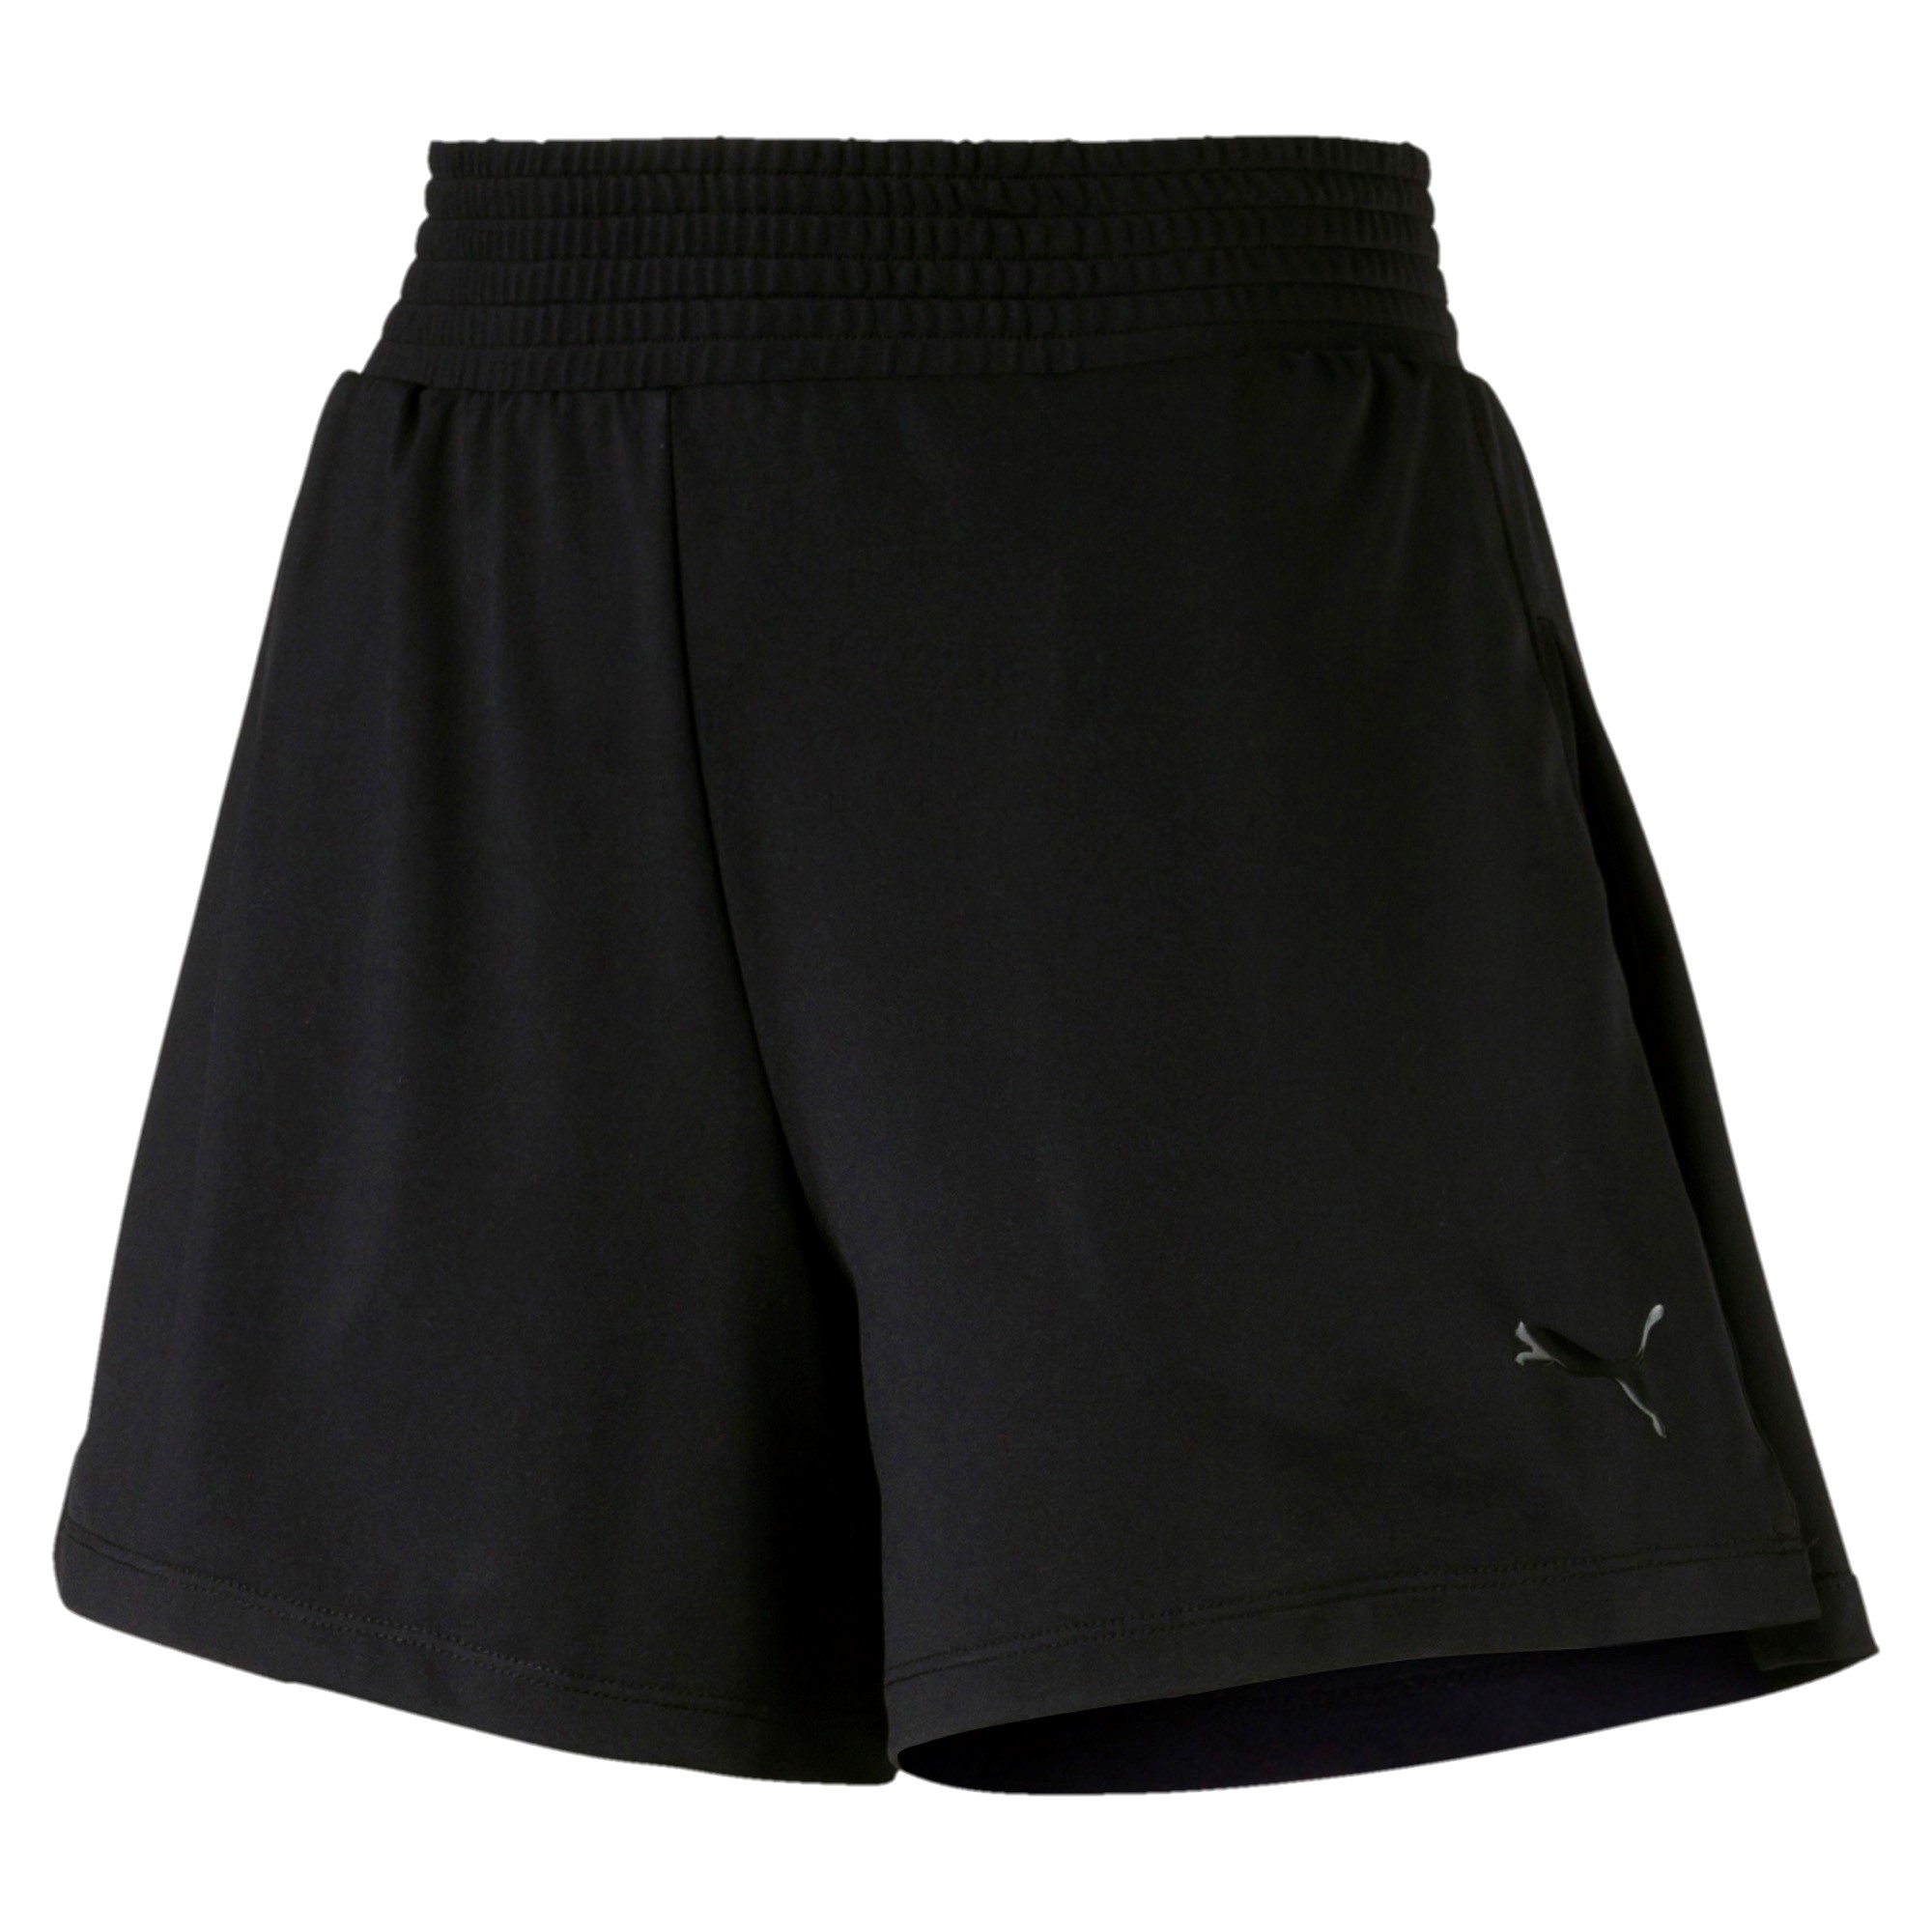 PUMA Damen Soft Sport Shorts Pant Hose Pants Fitnesshose 854330 01 schwarz